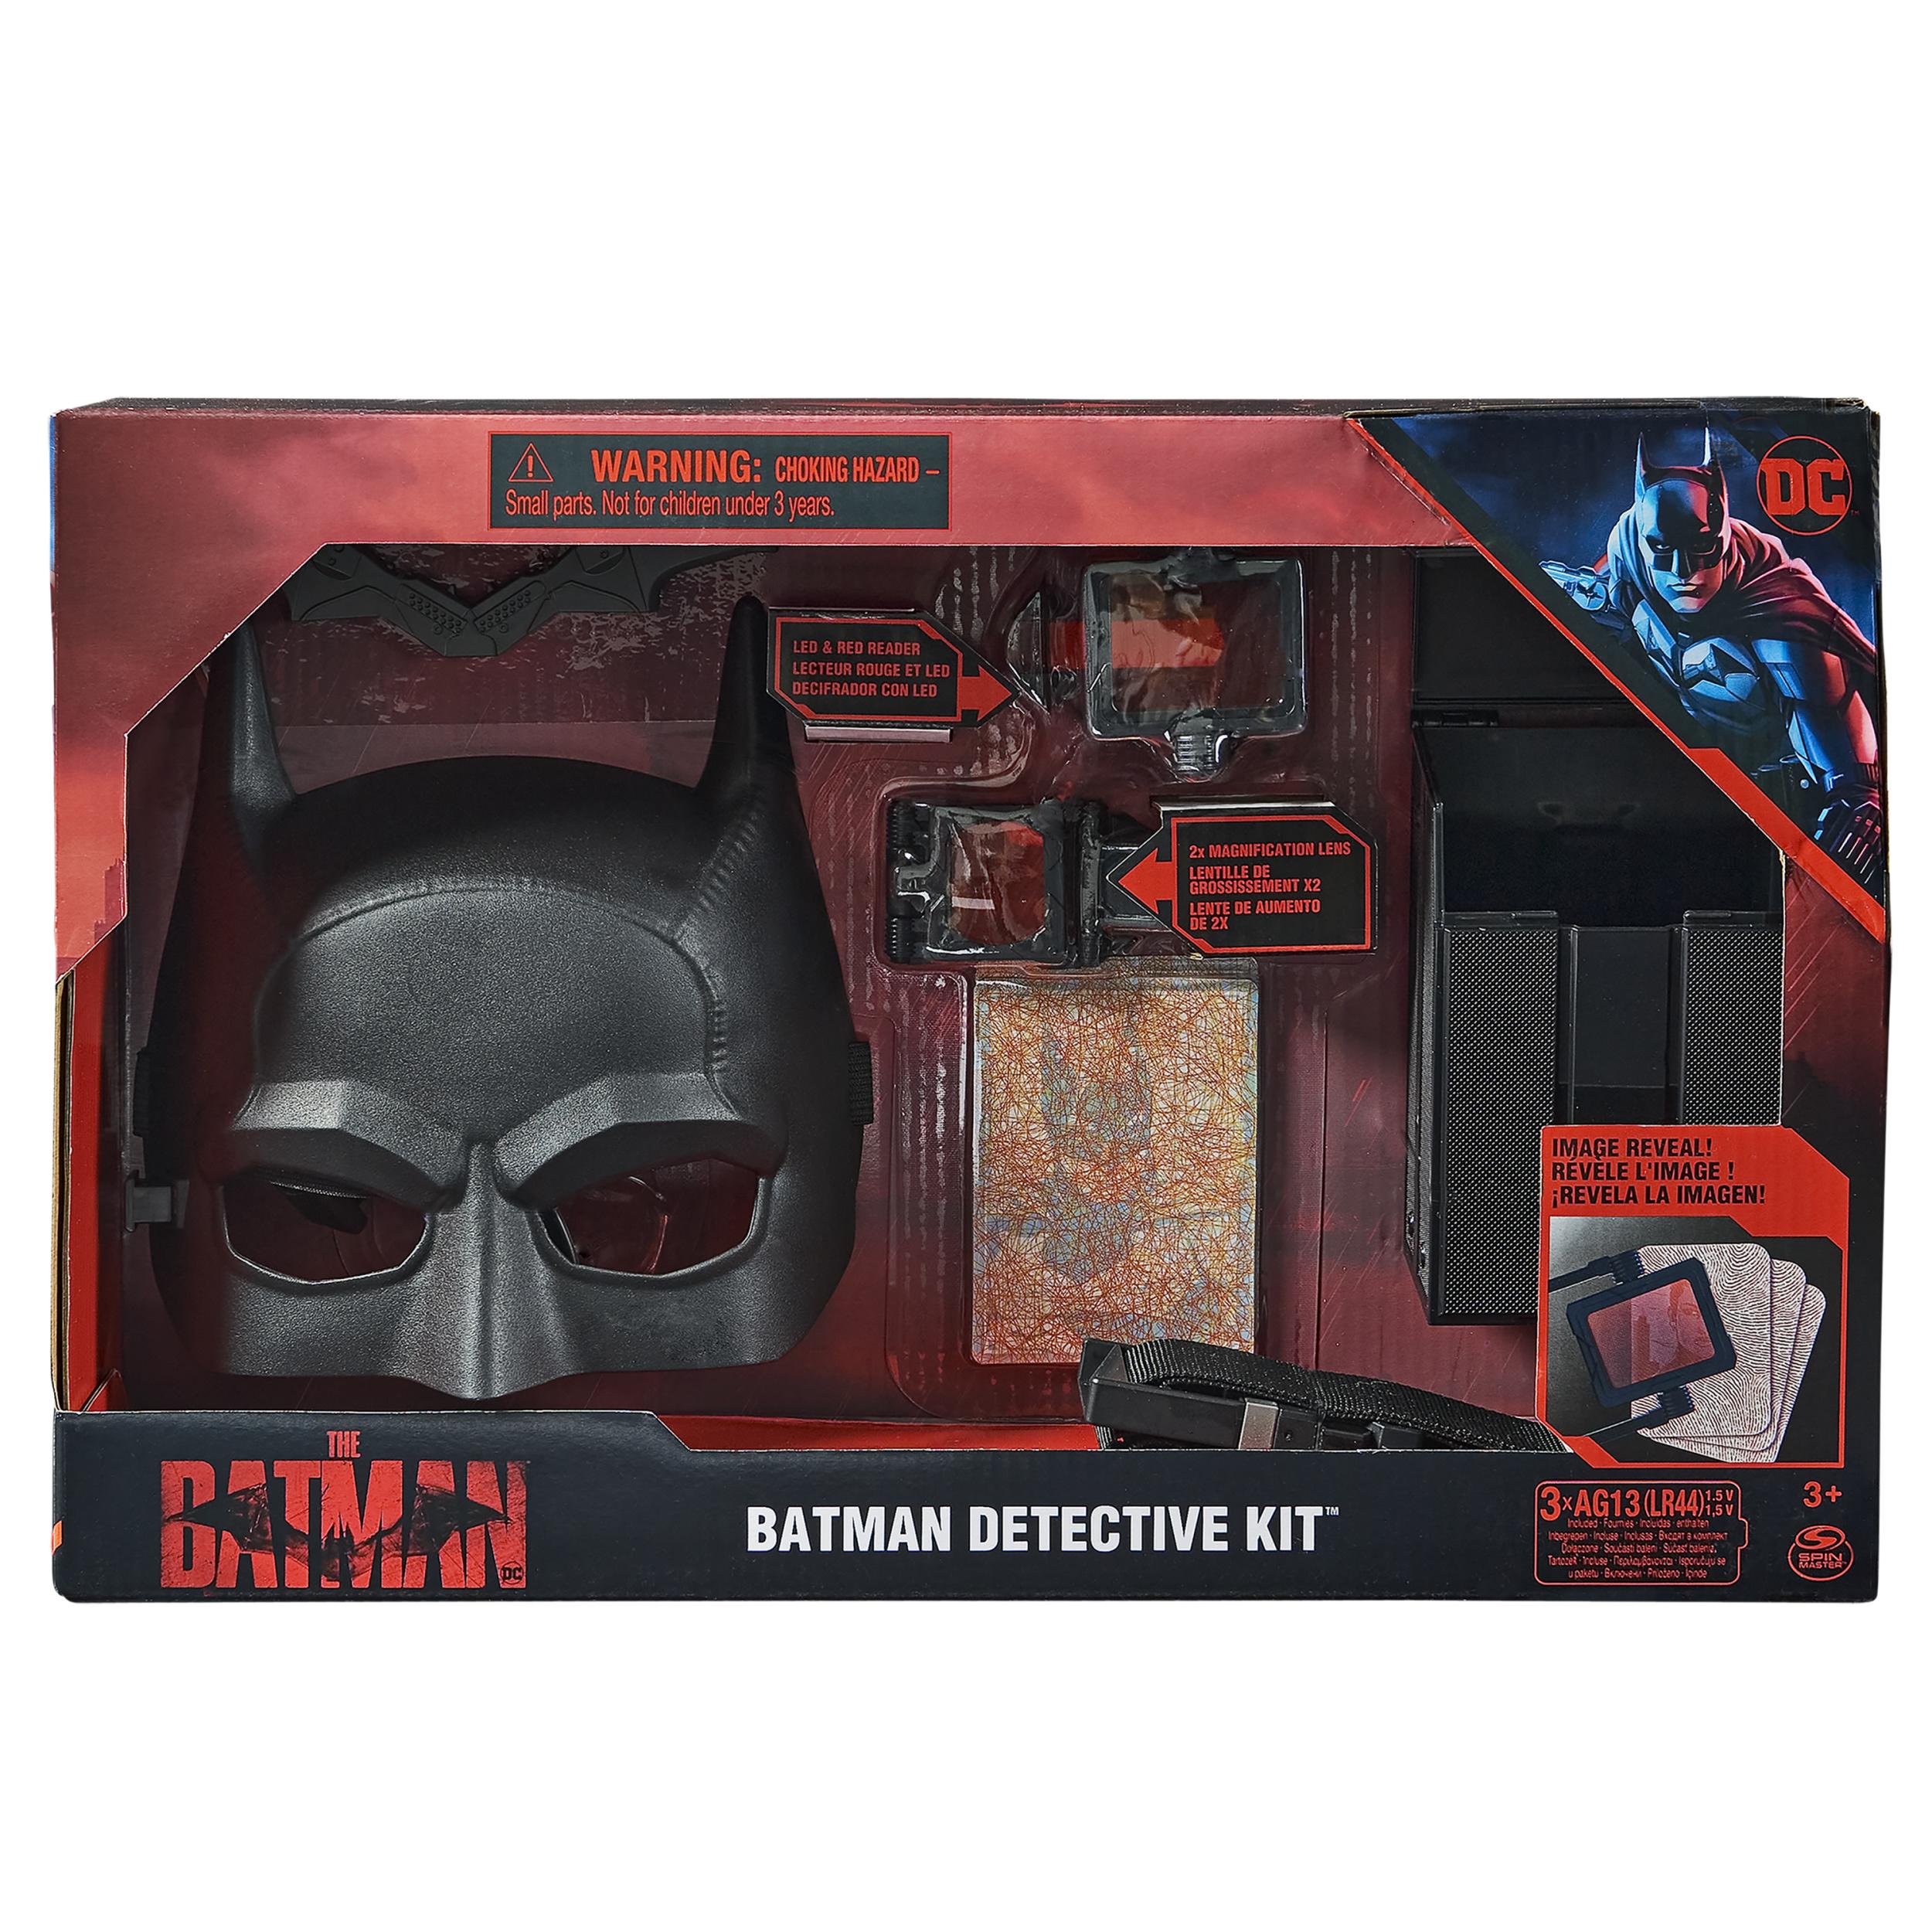 The batman detective kit img 1